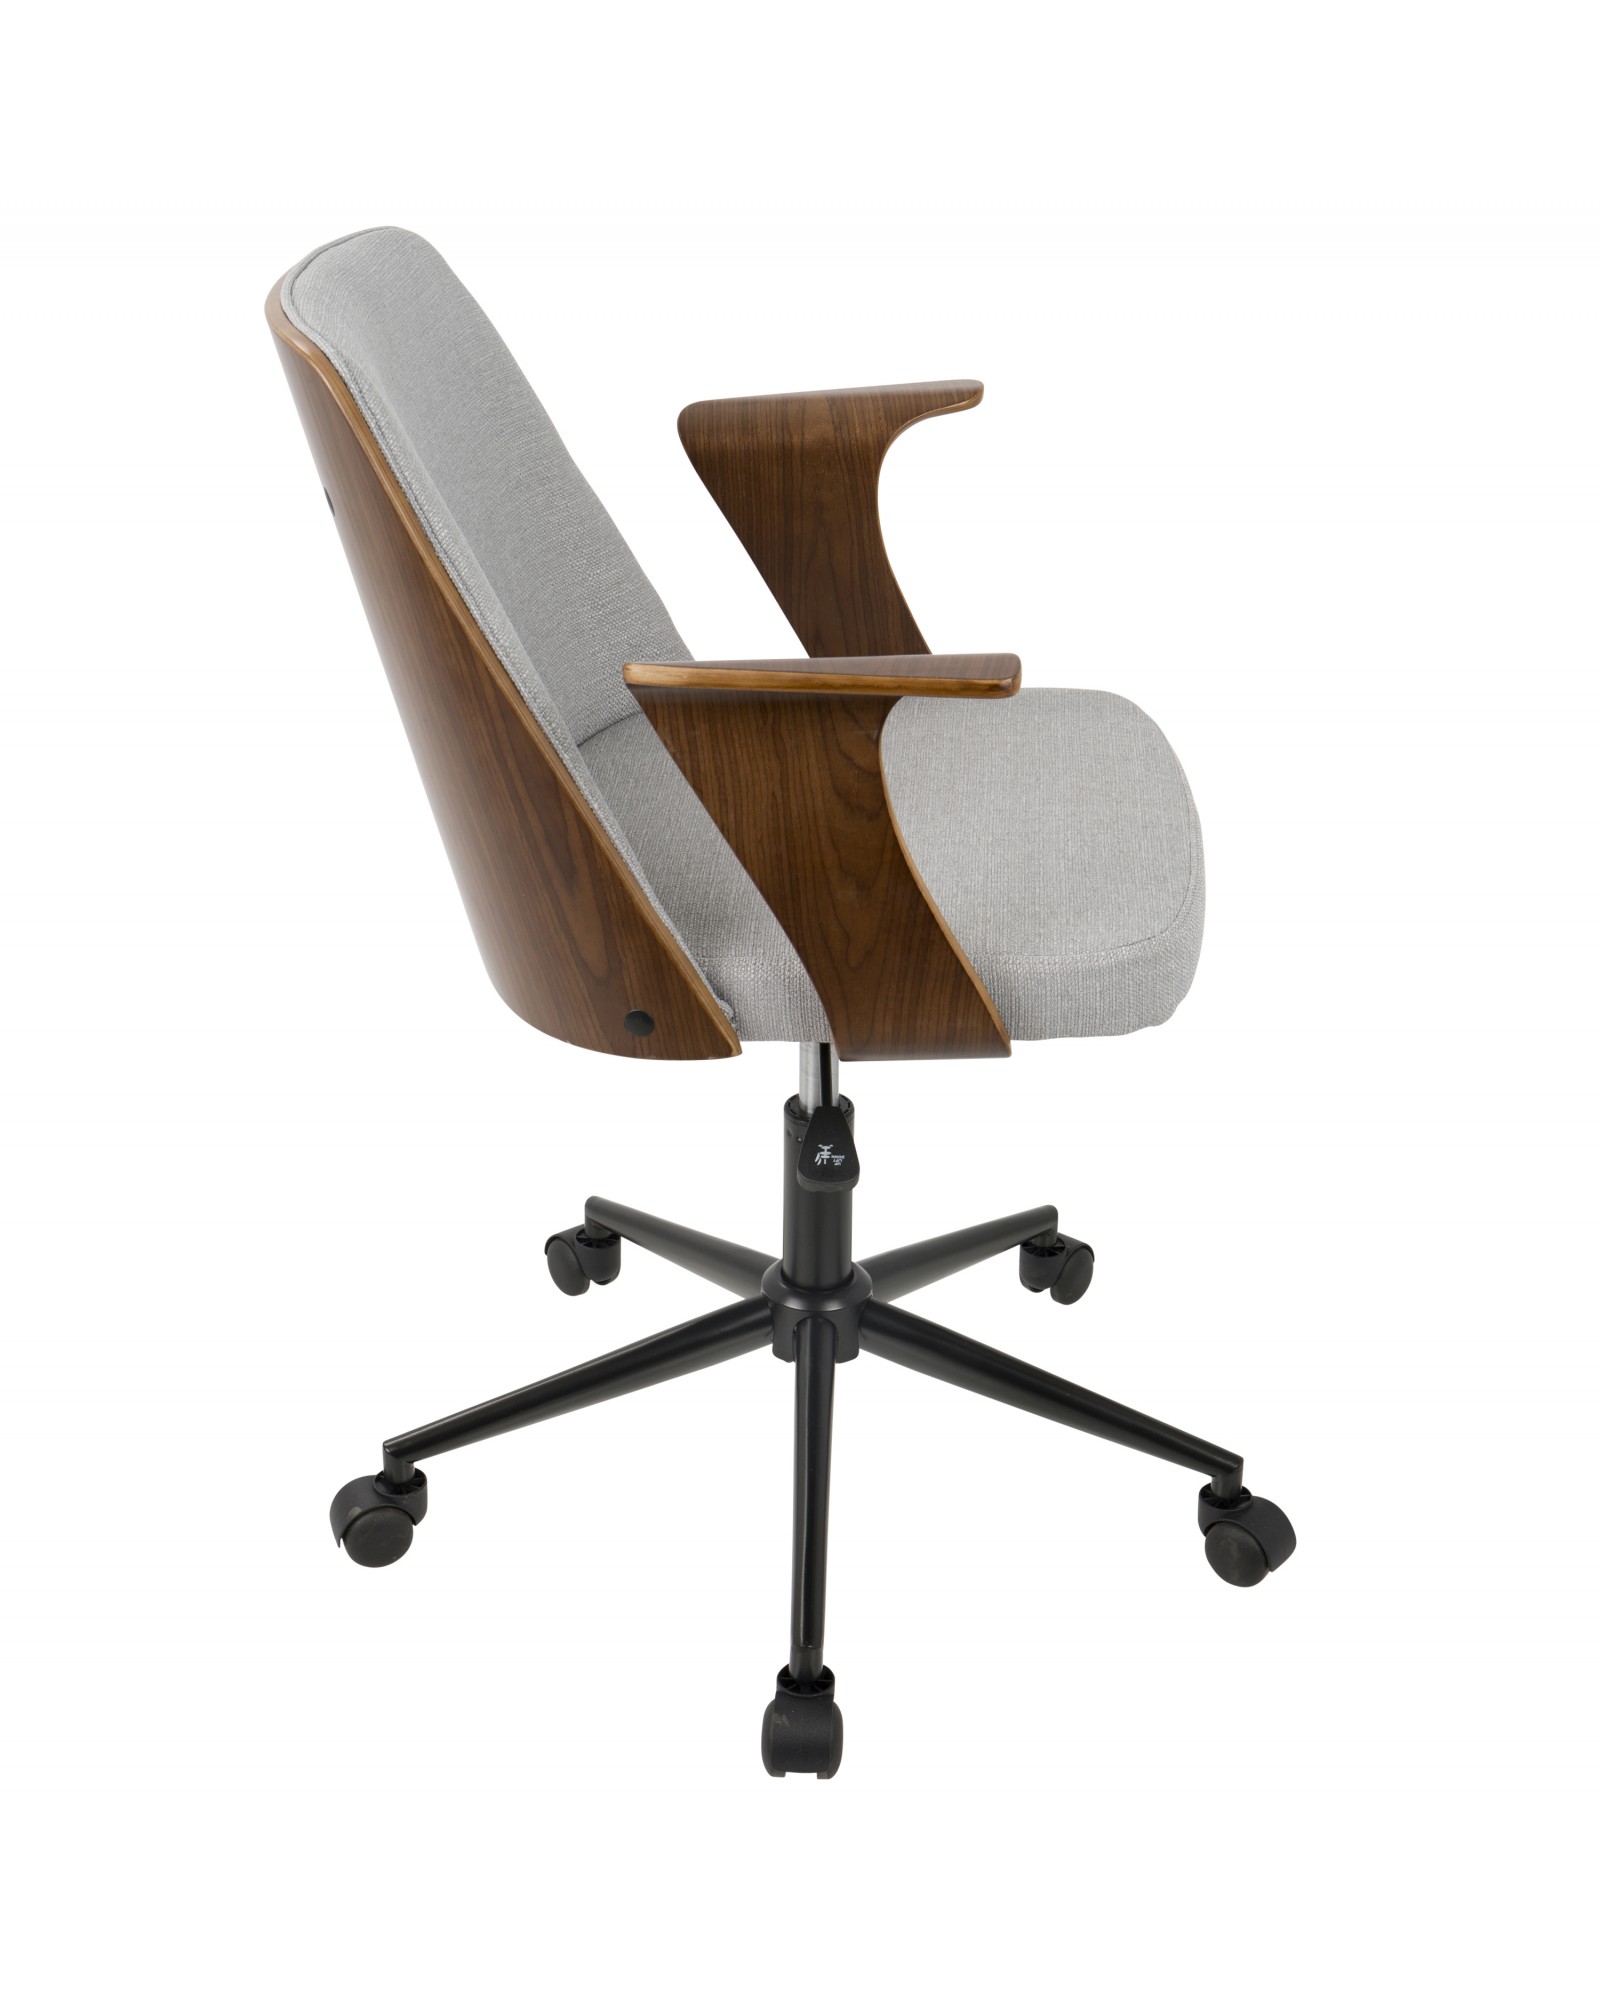 Verdana Mid-Century Modern Office Chair in Walnut Wood and Grey Fabric